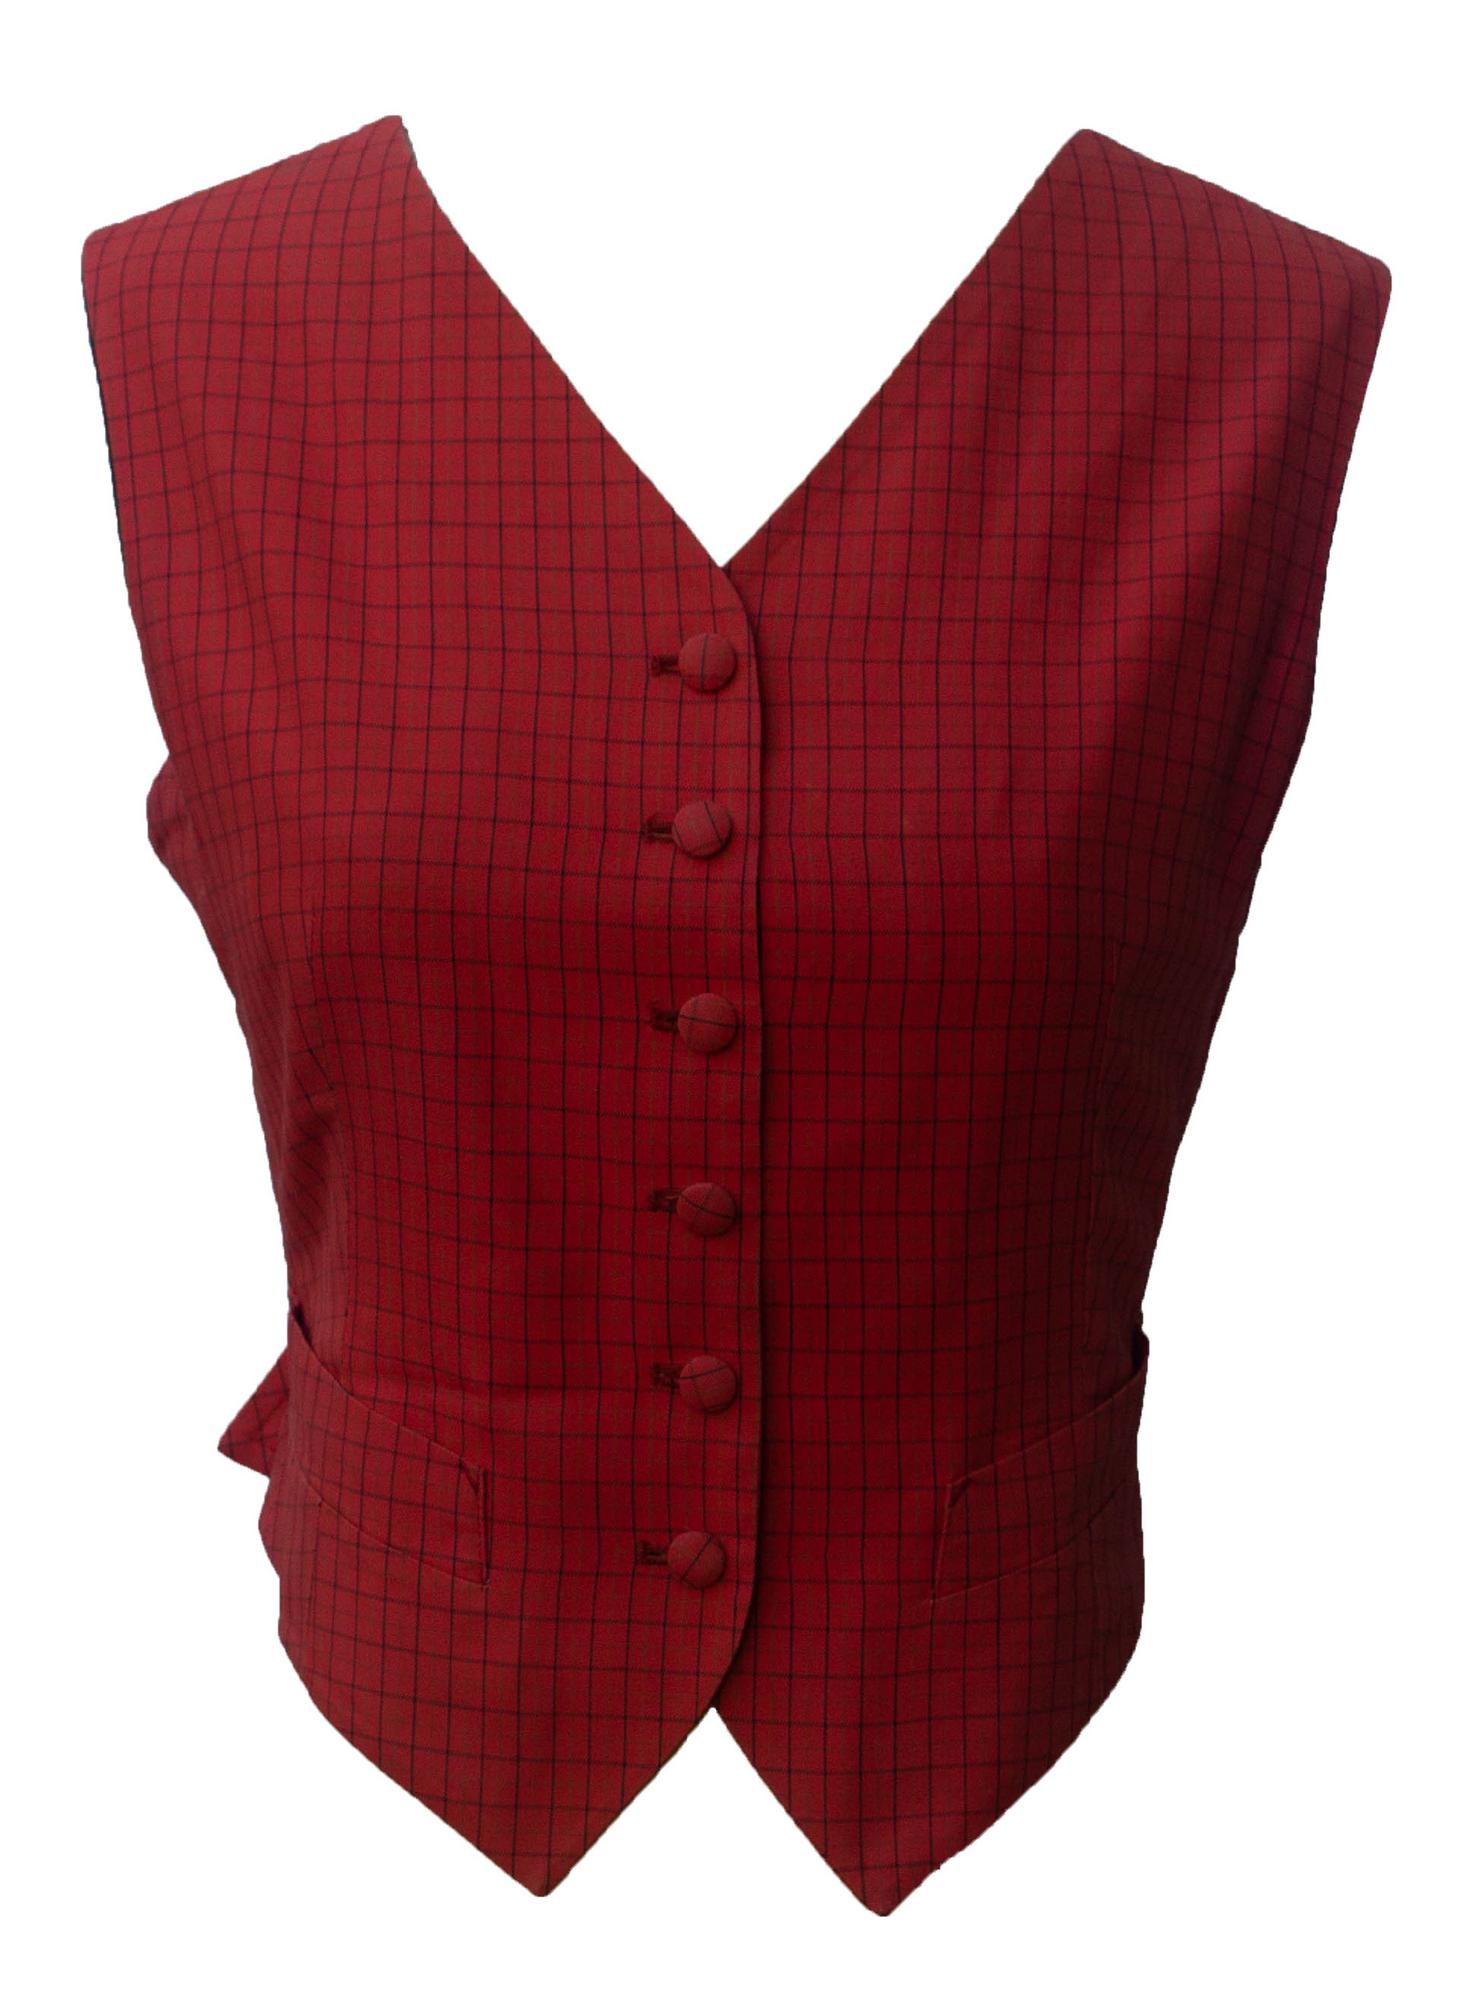 Jean Paul Gaultier TATTERSALL WAISTCOAT Description:Red tattersall fabric for...